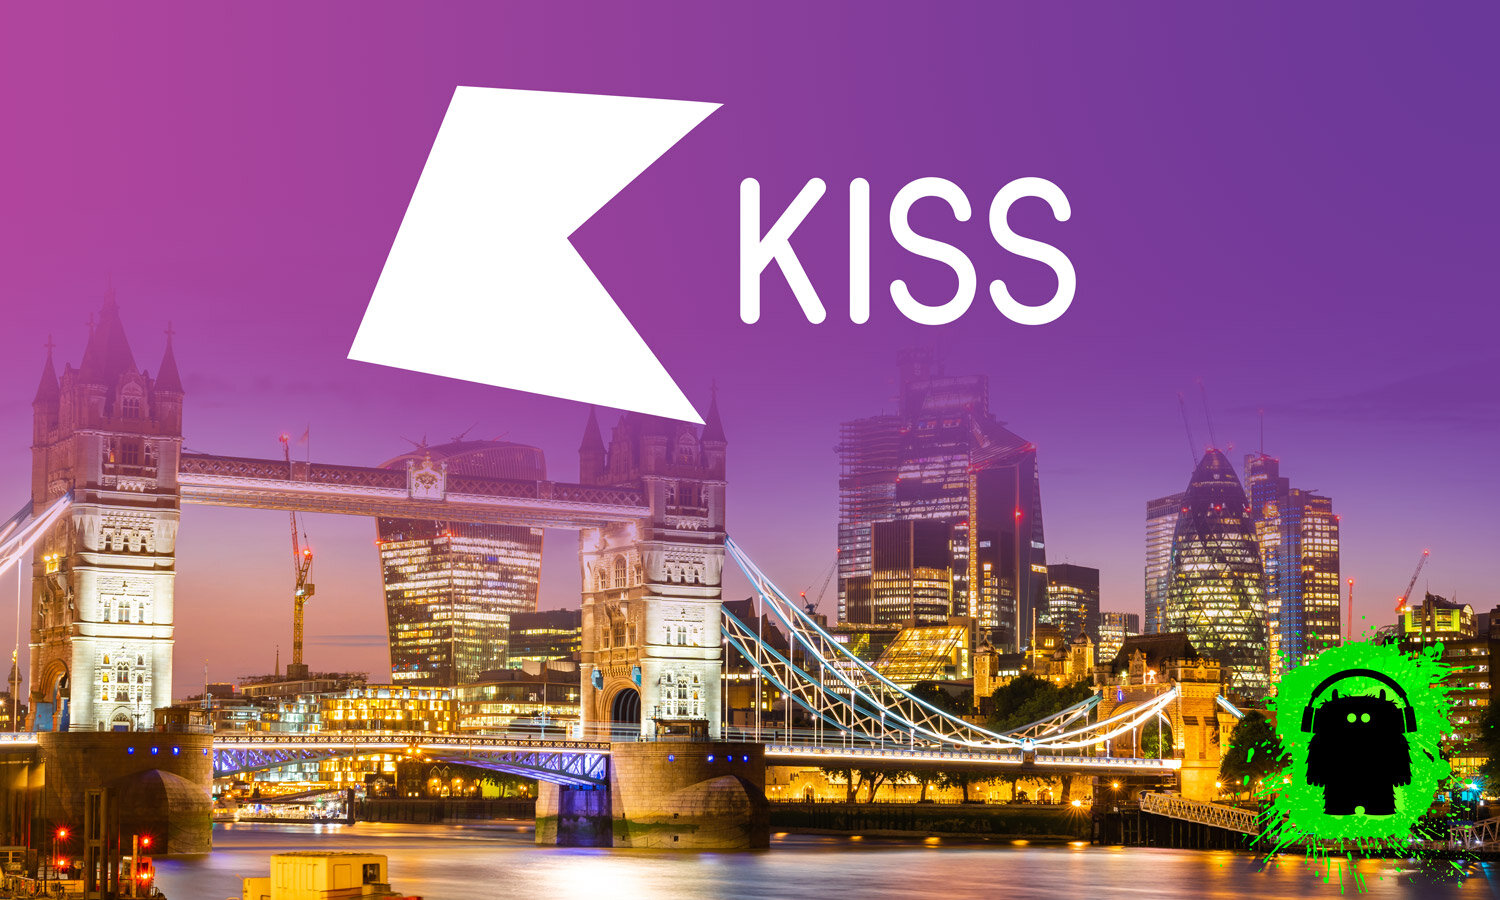 Kiss-Radio-Graphic-1500x900.jpg